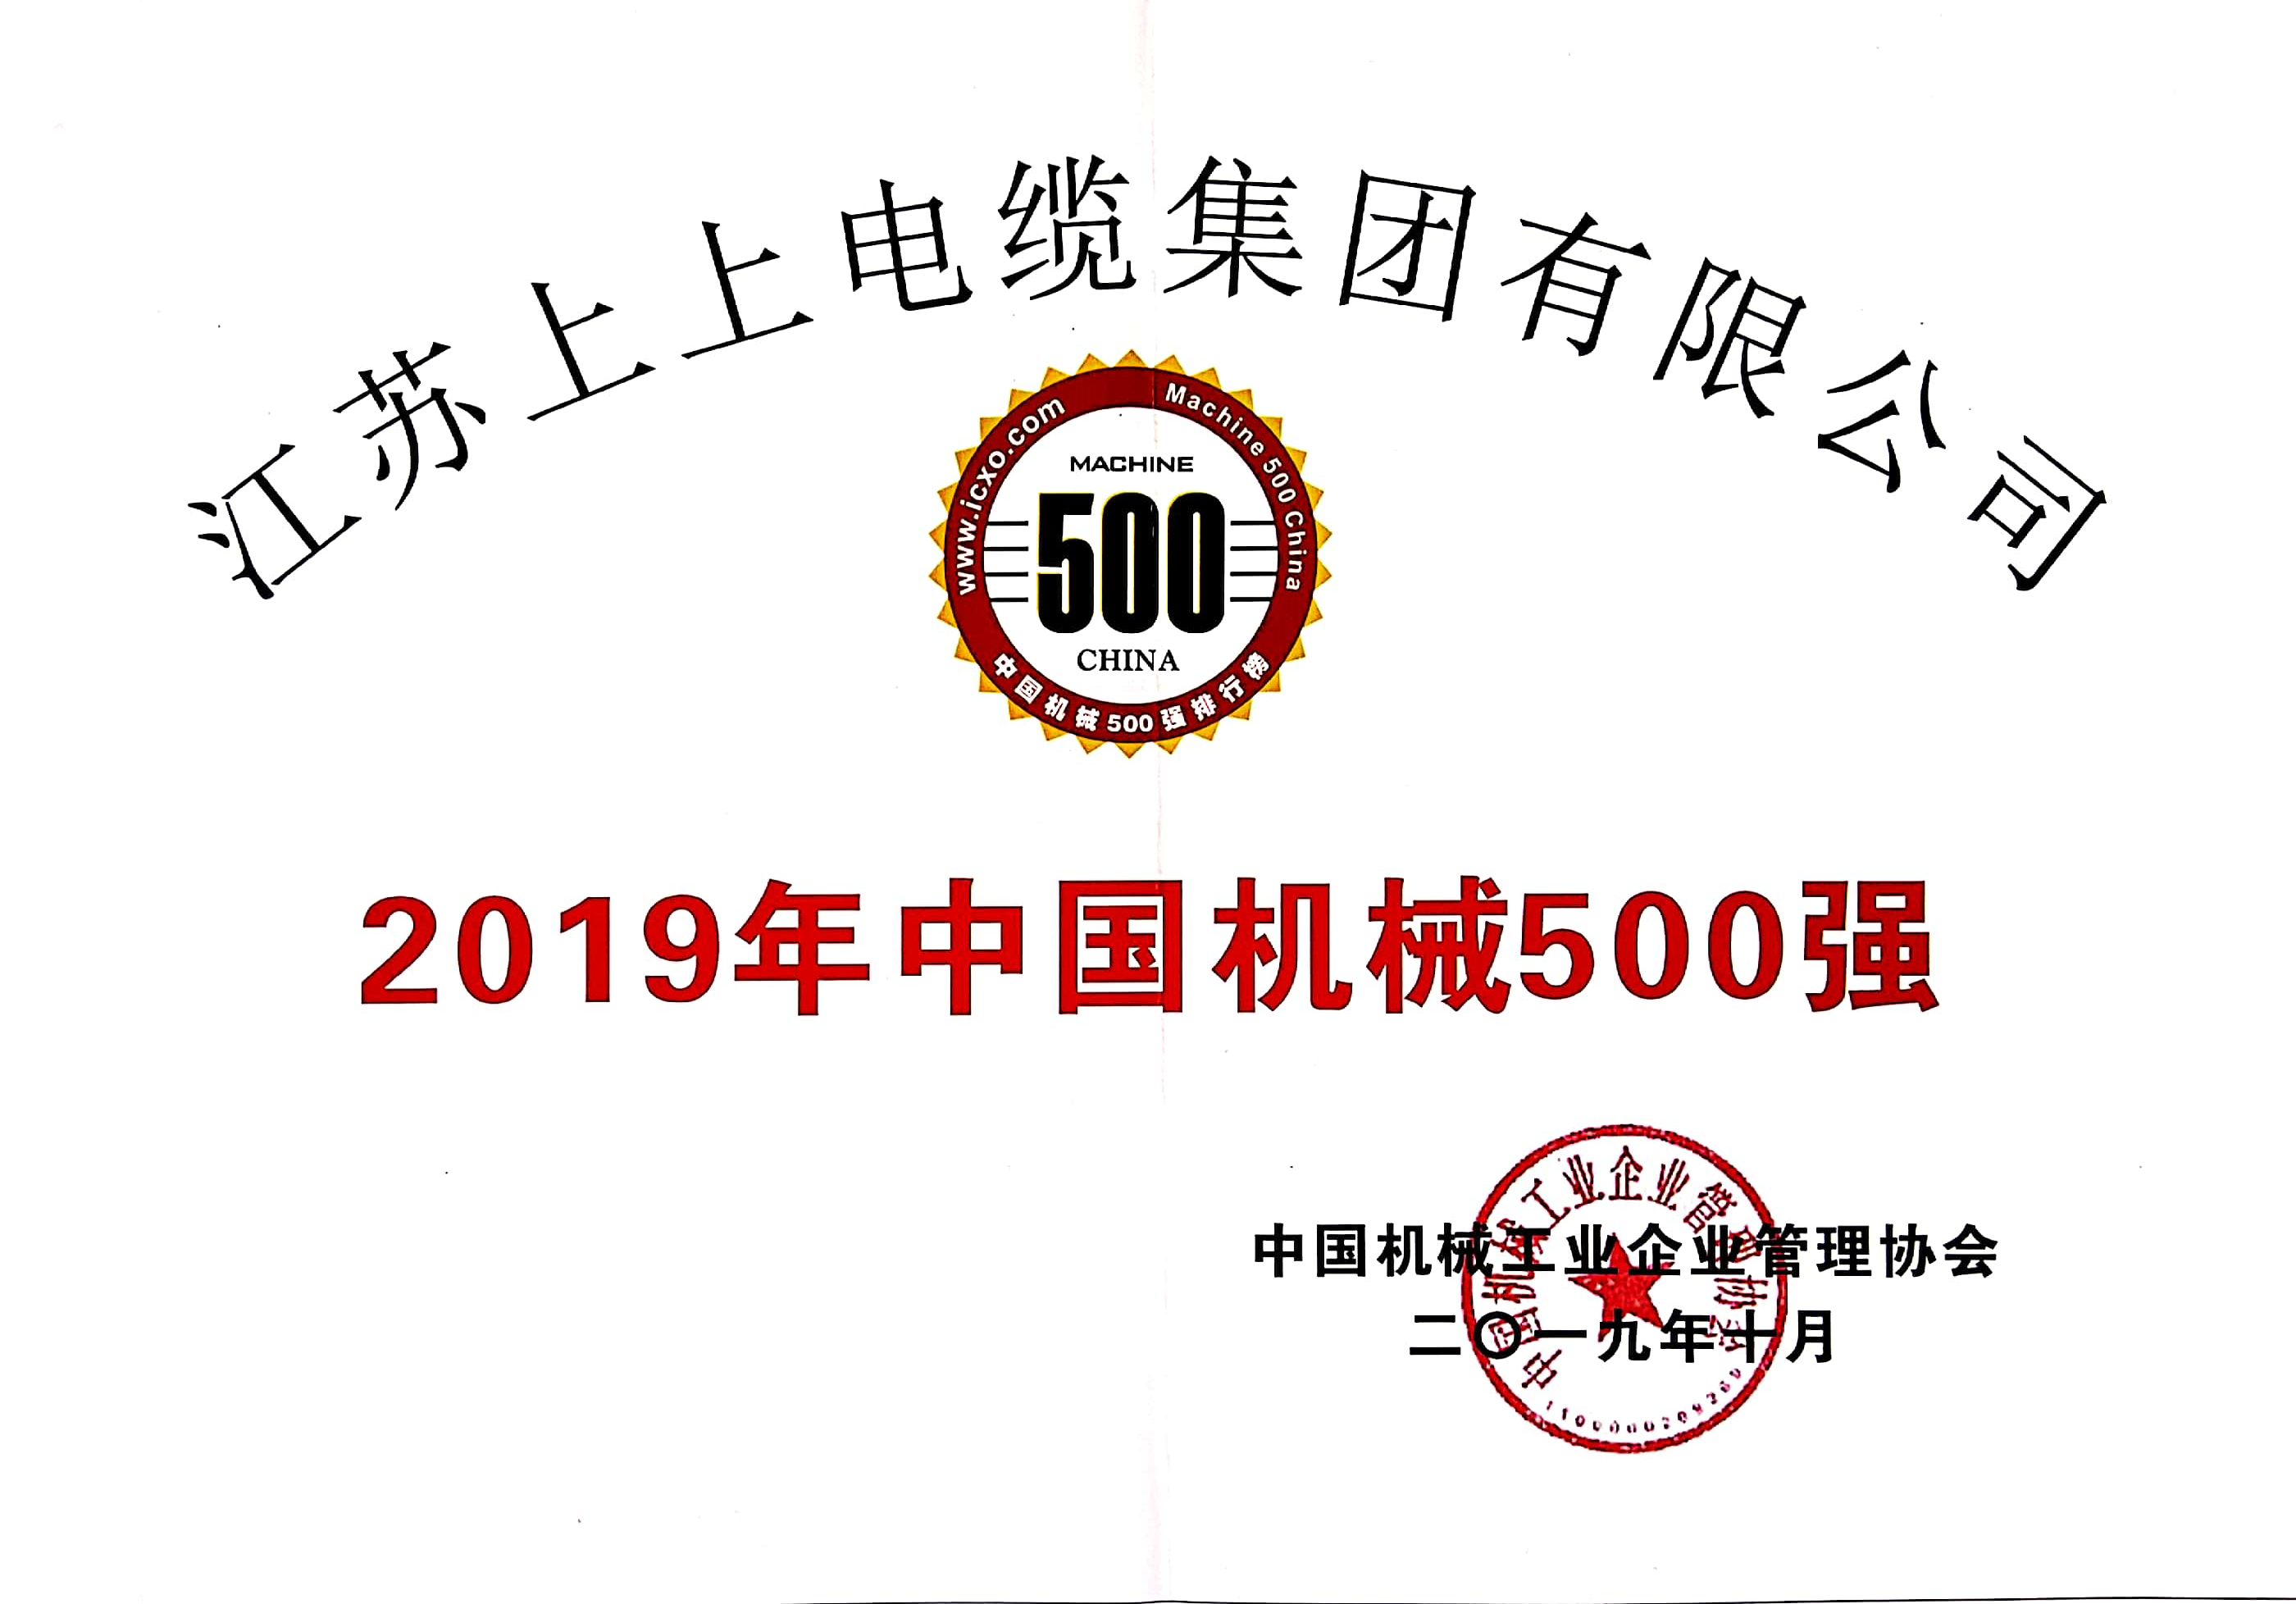 pg电子电缆入选中国机械500强，排名第61位